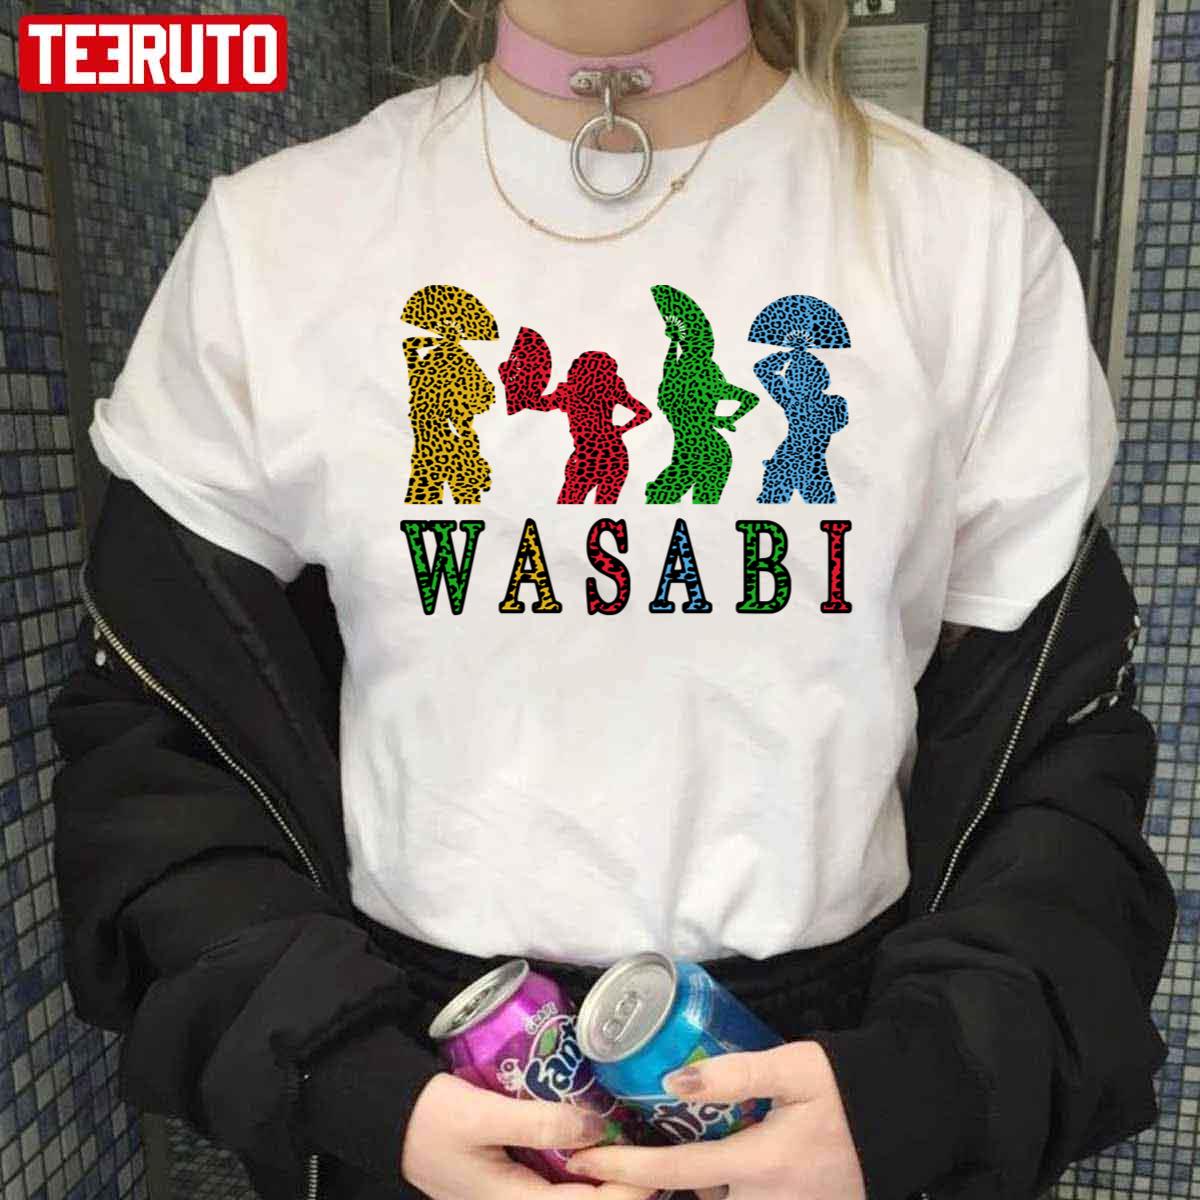 Wasabi Little Mix Band Music British Girls Group Unisex T-Shirt